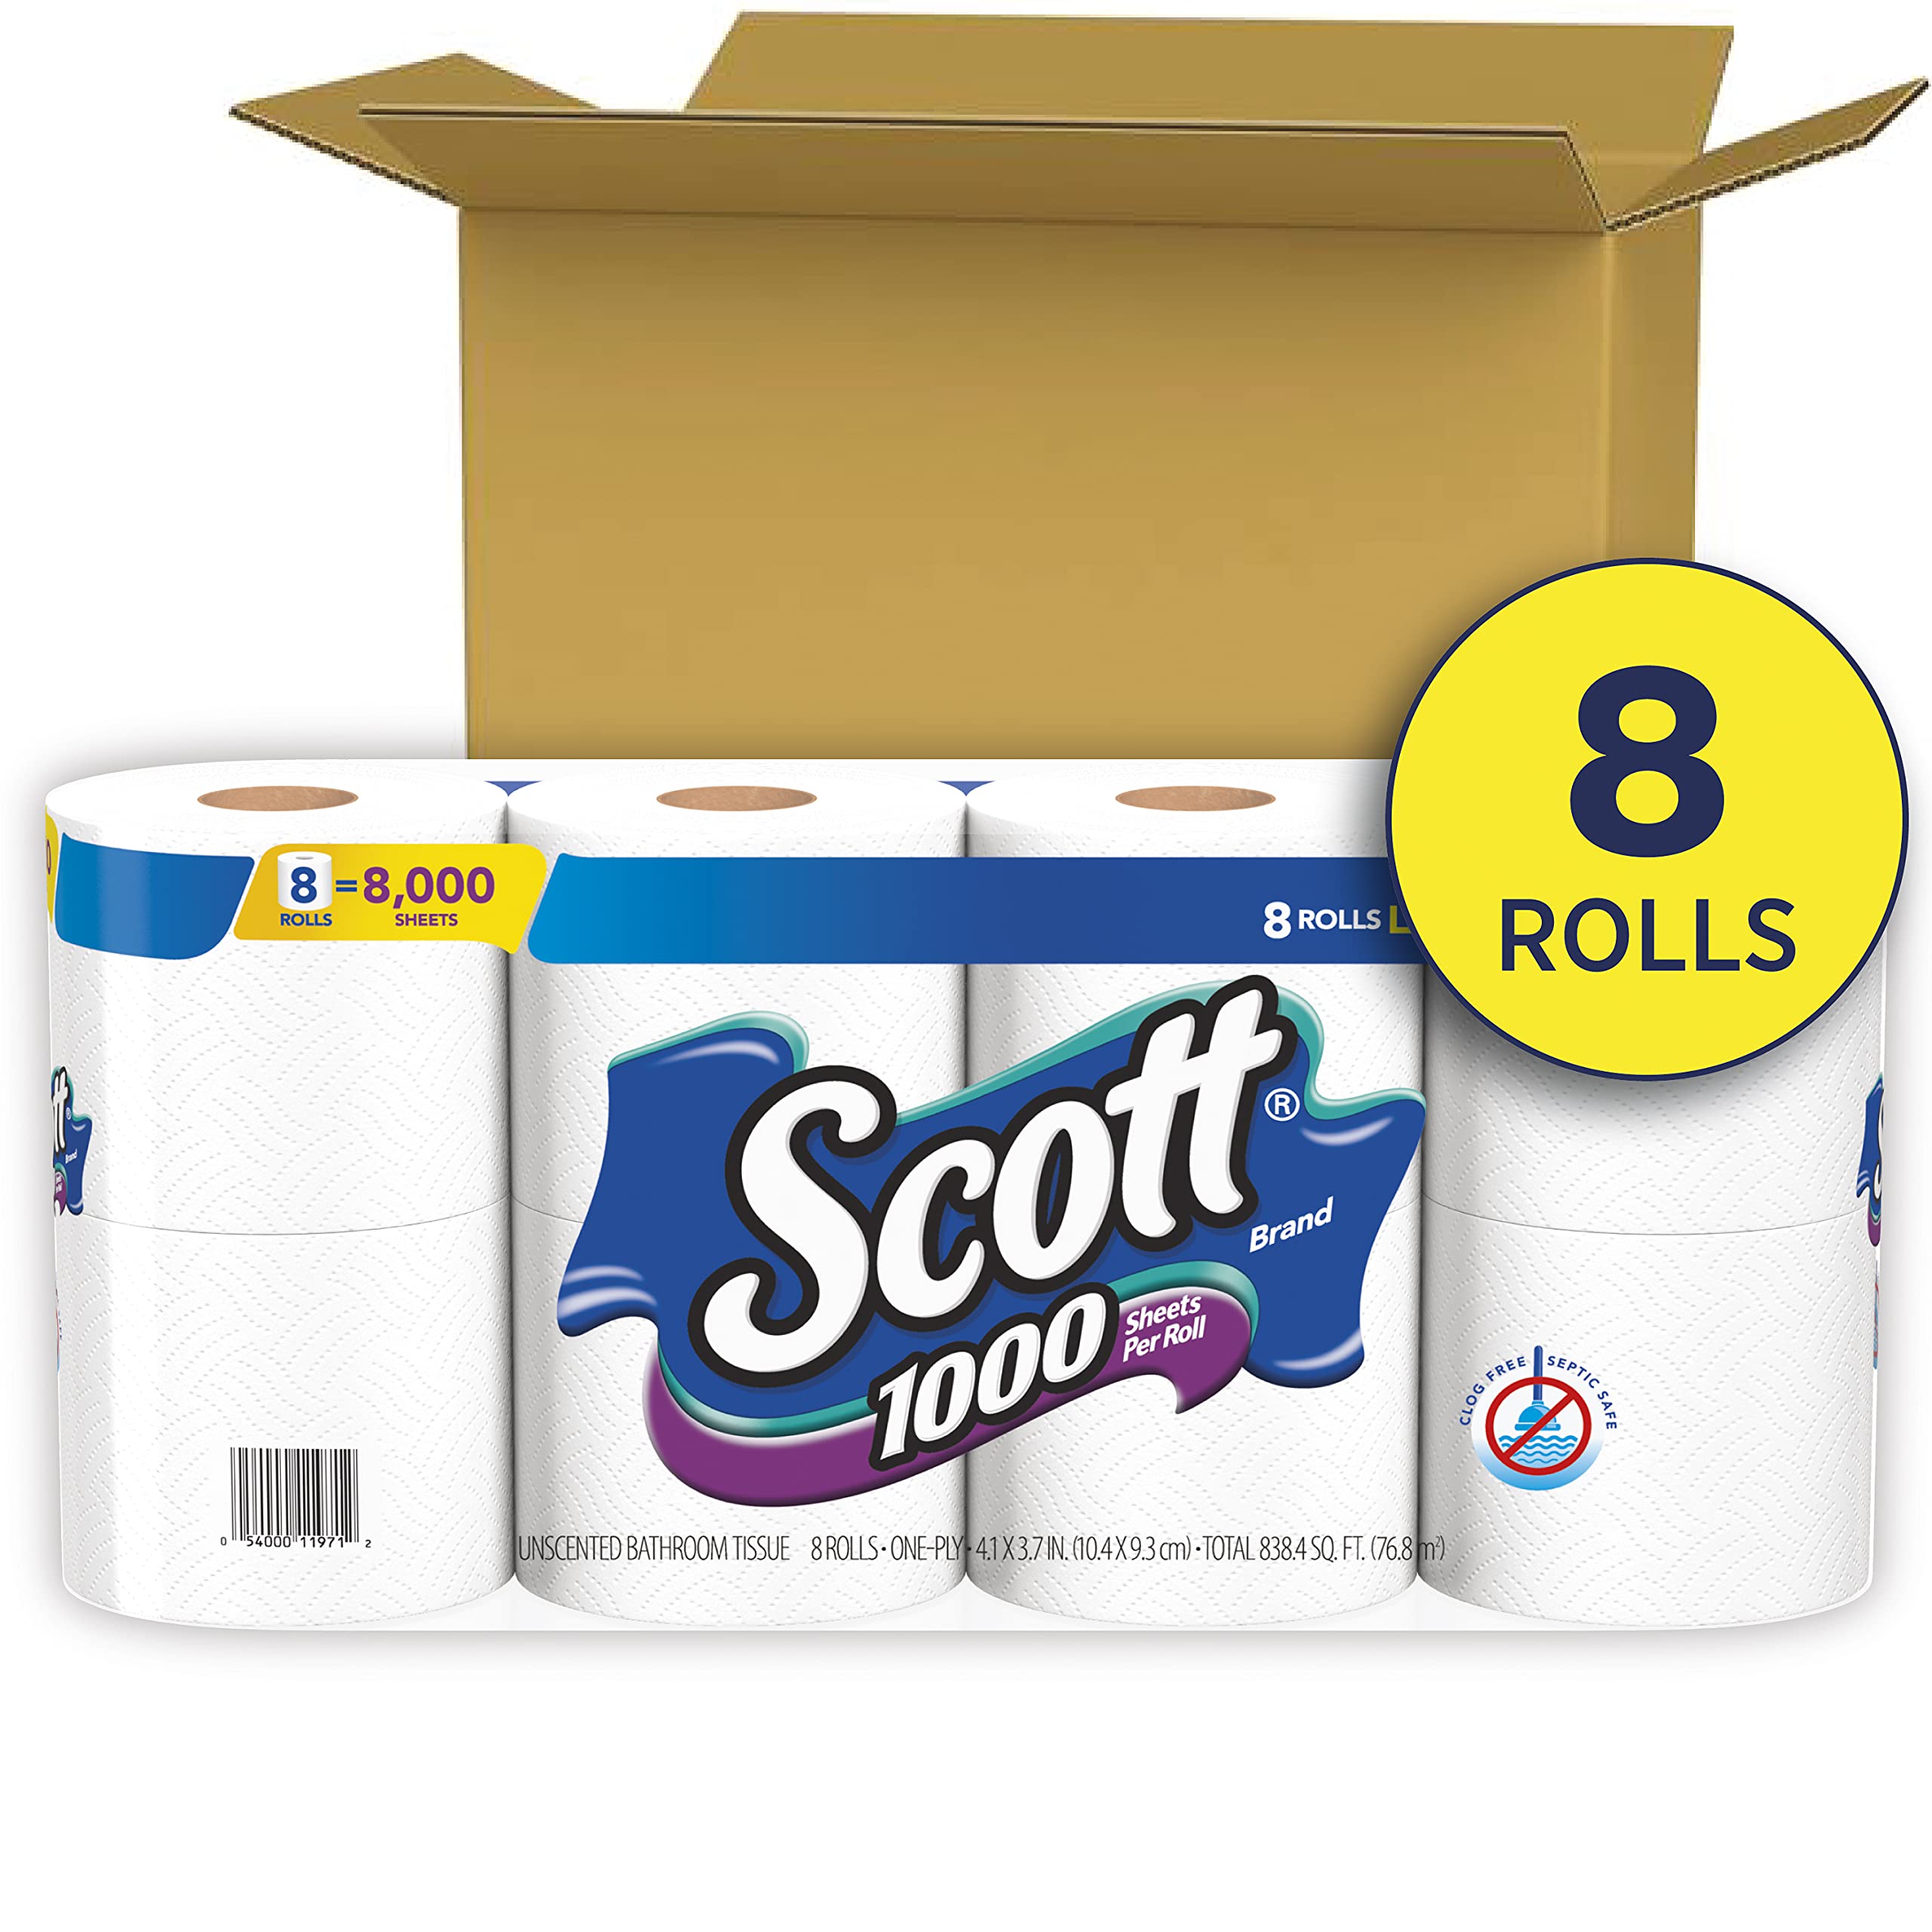 Scott 1000, Toilet Paper, 8 Rolls